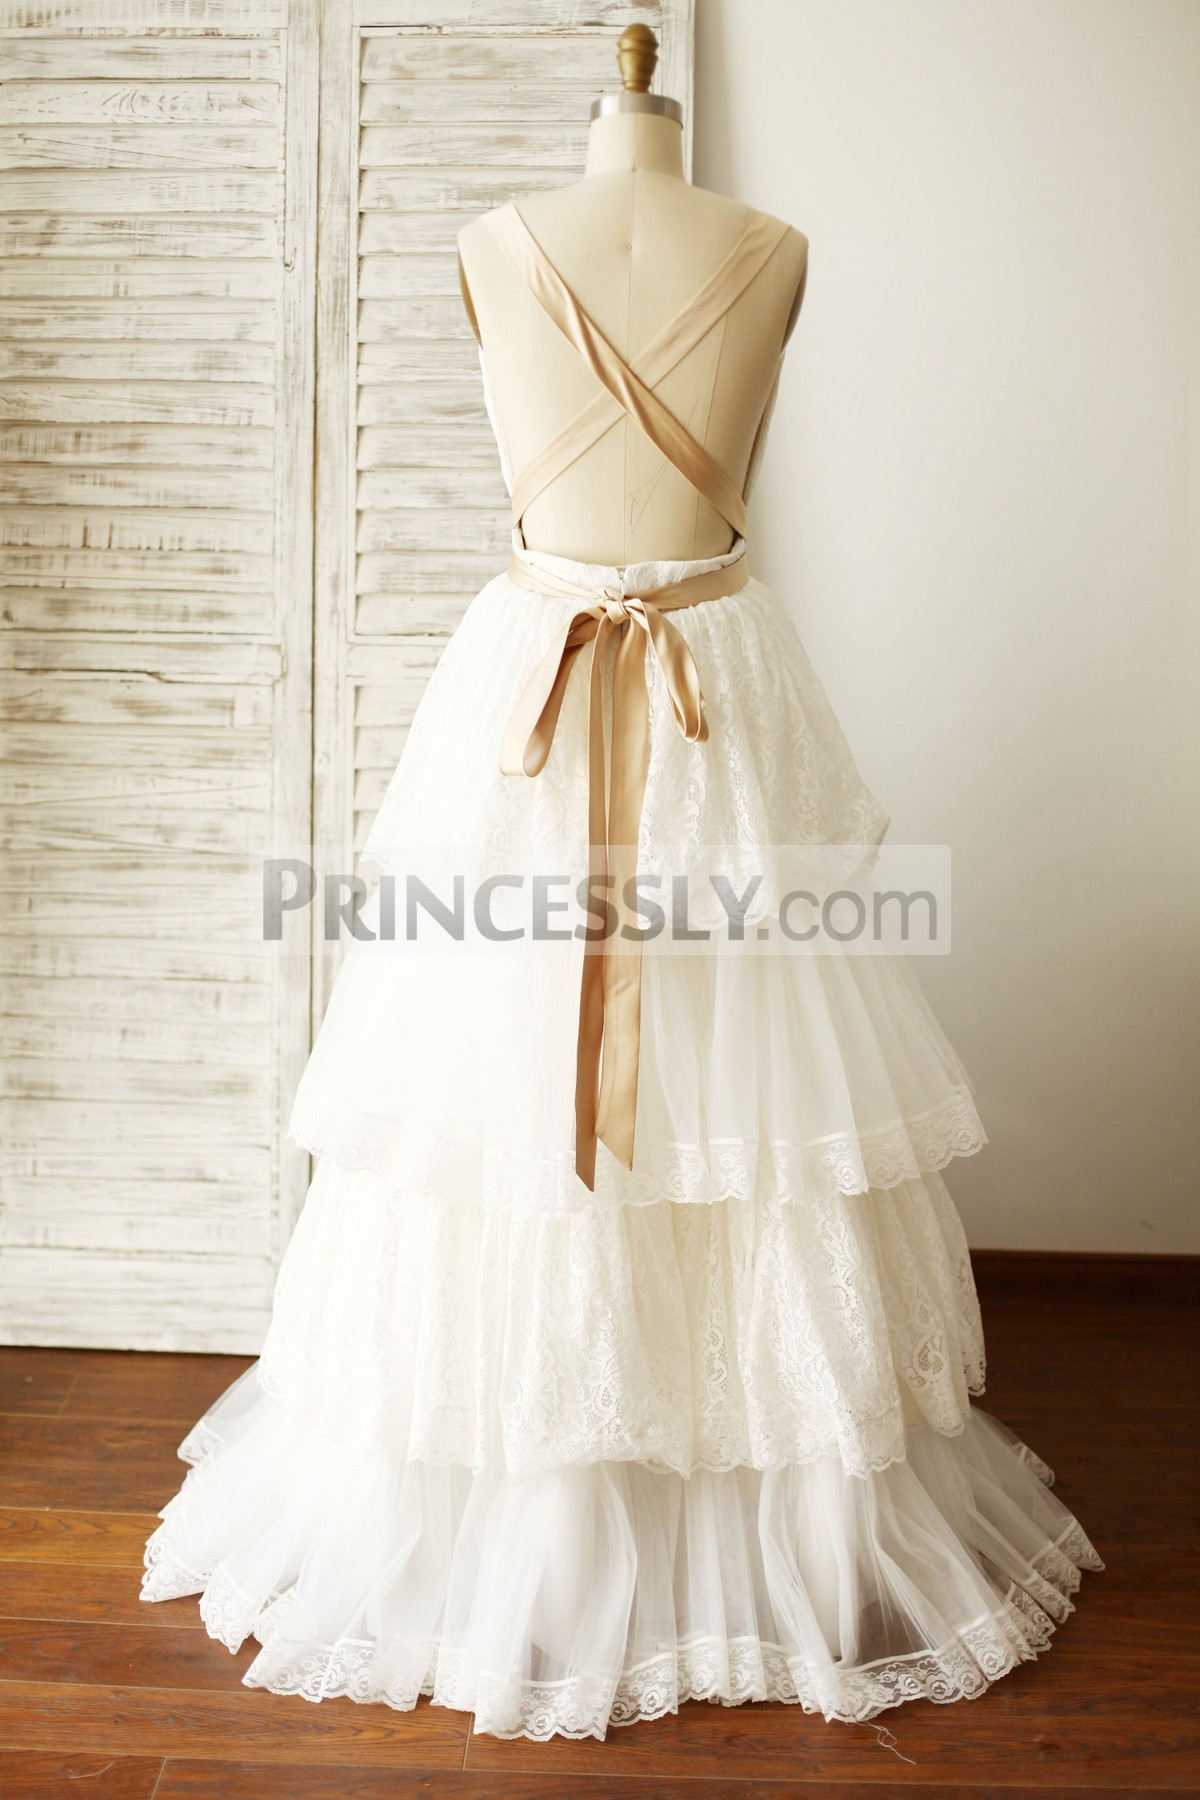 Princessly.com-K1000101-Boho Beach Ivory Lace Tulle Plunging Neck Backless Wedding Dress-31